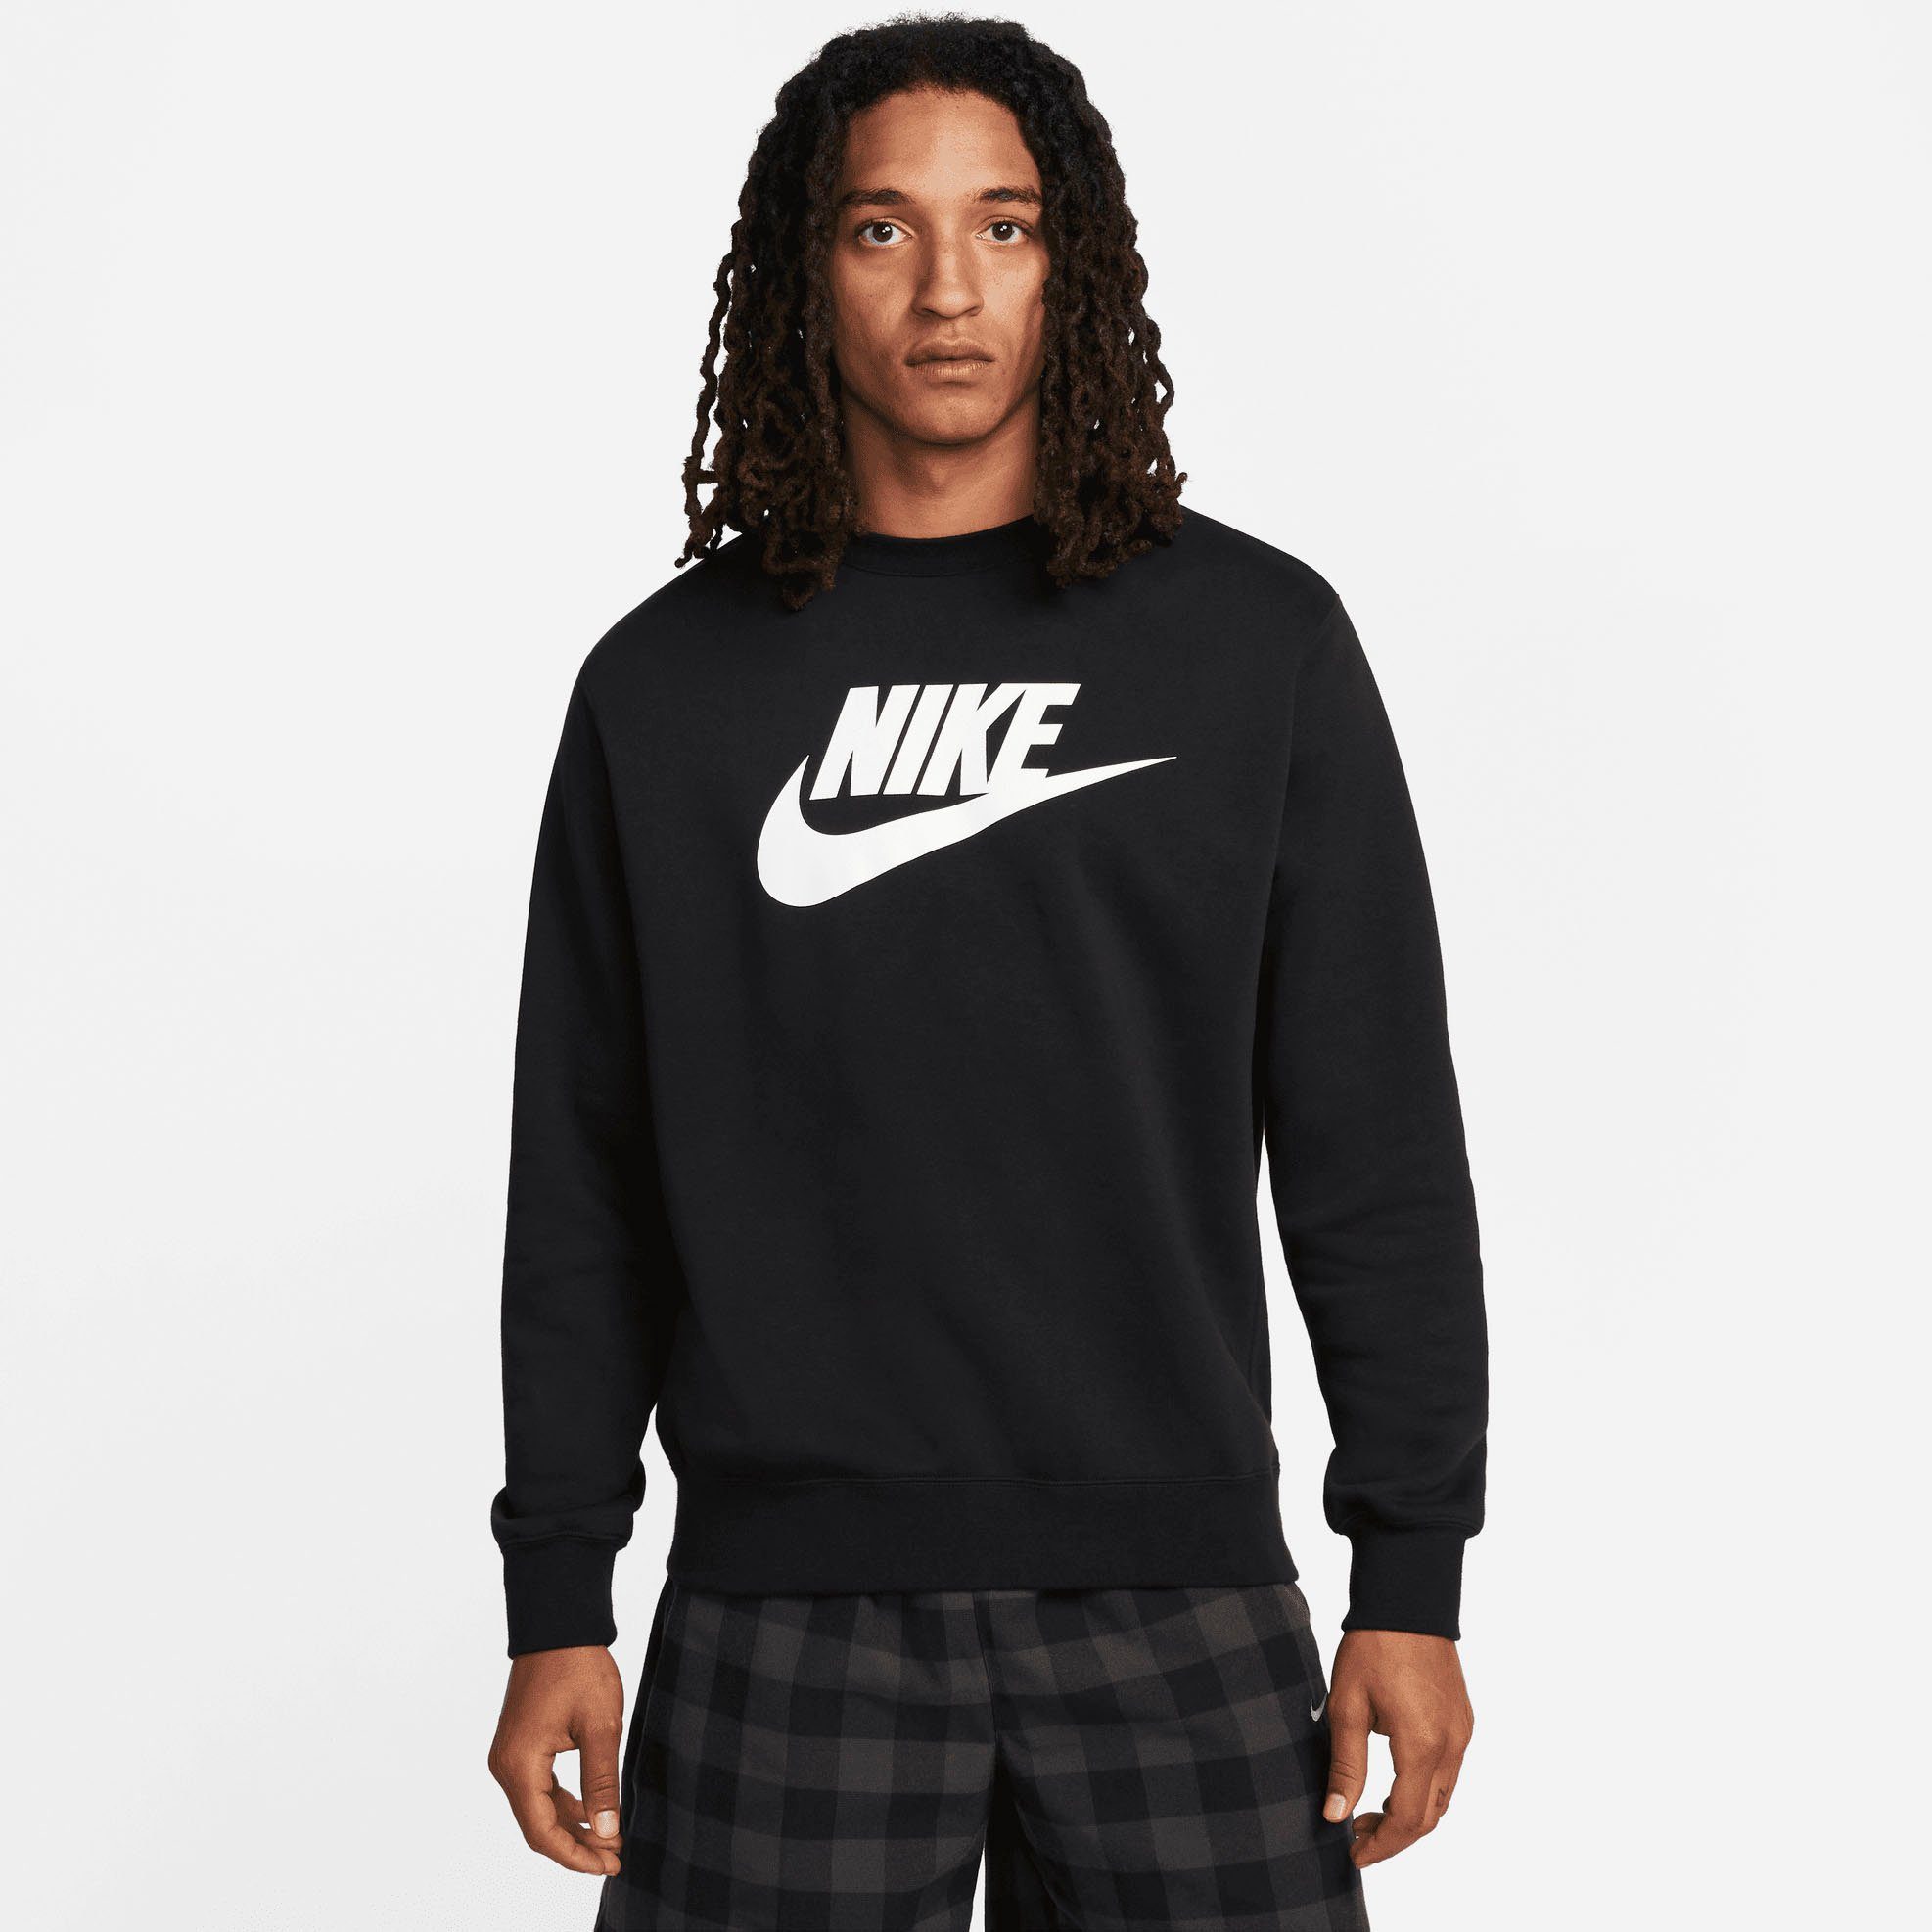 Sweatshirt Men's Nike Fleece Crew Graphic Club Sportswear BLACK